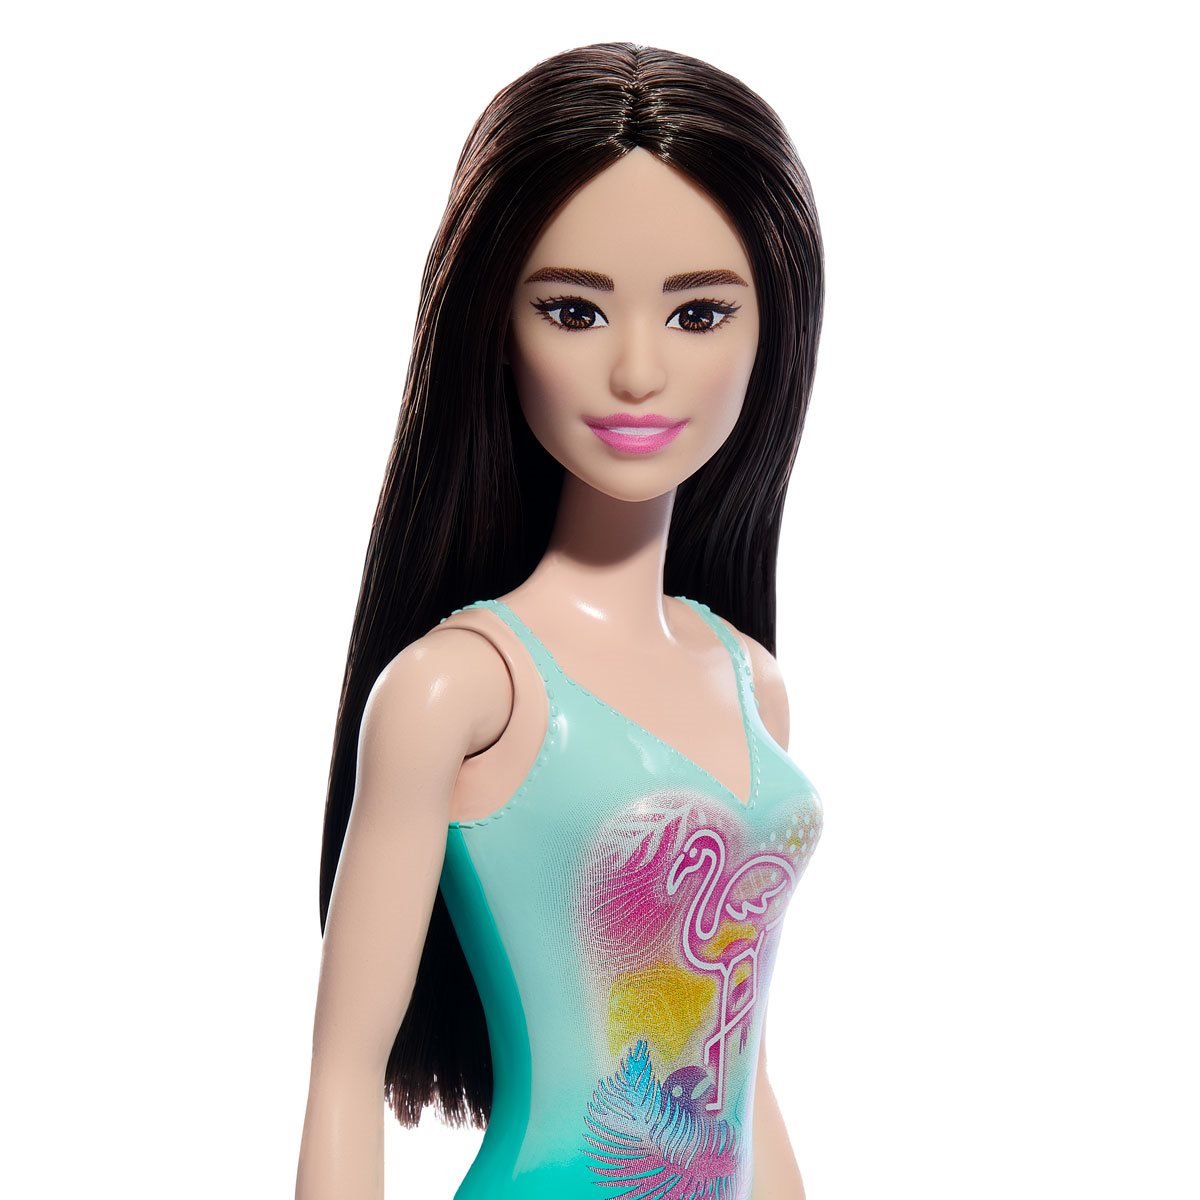 Image result for metallic barbie bodysuit